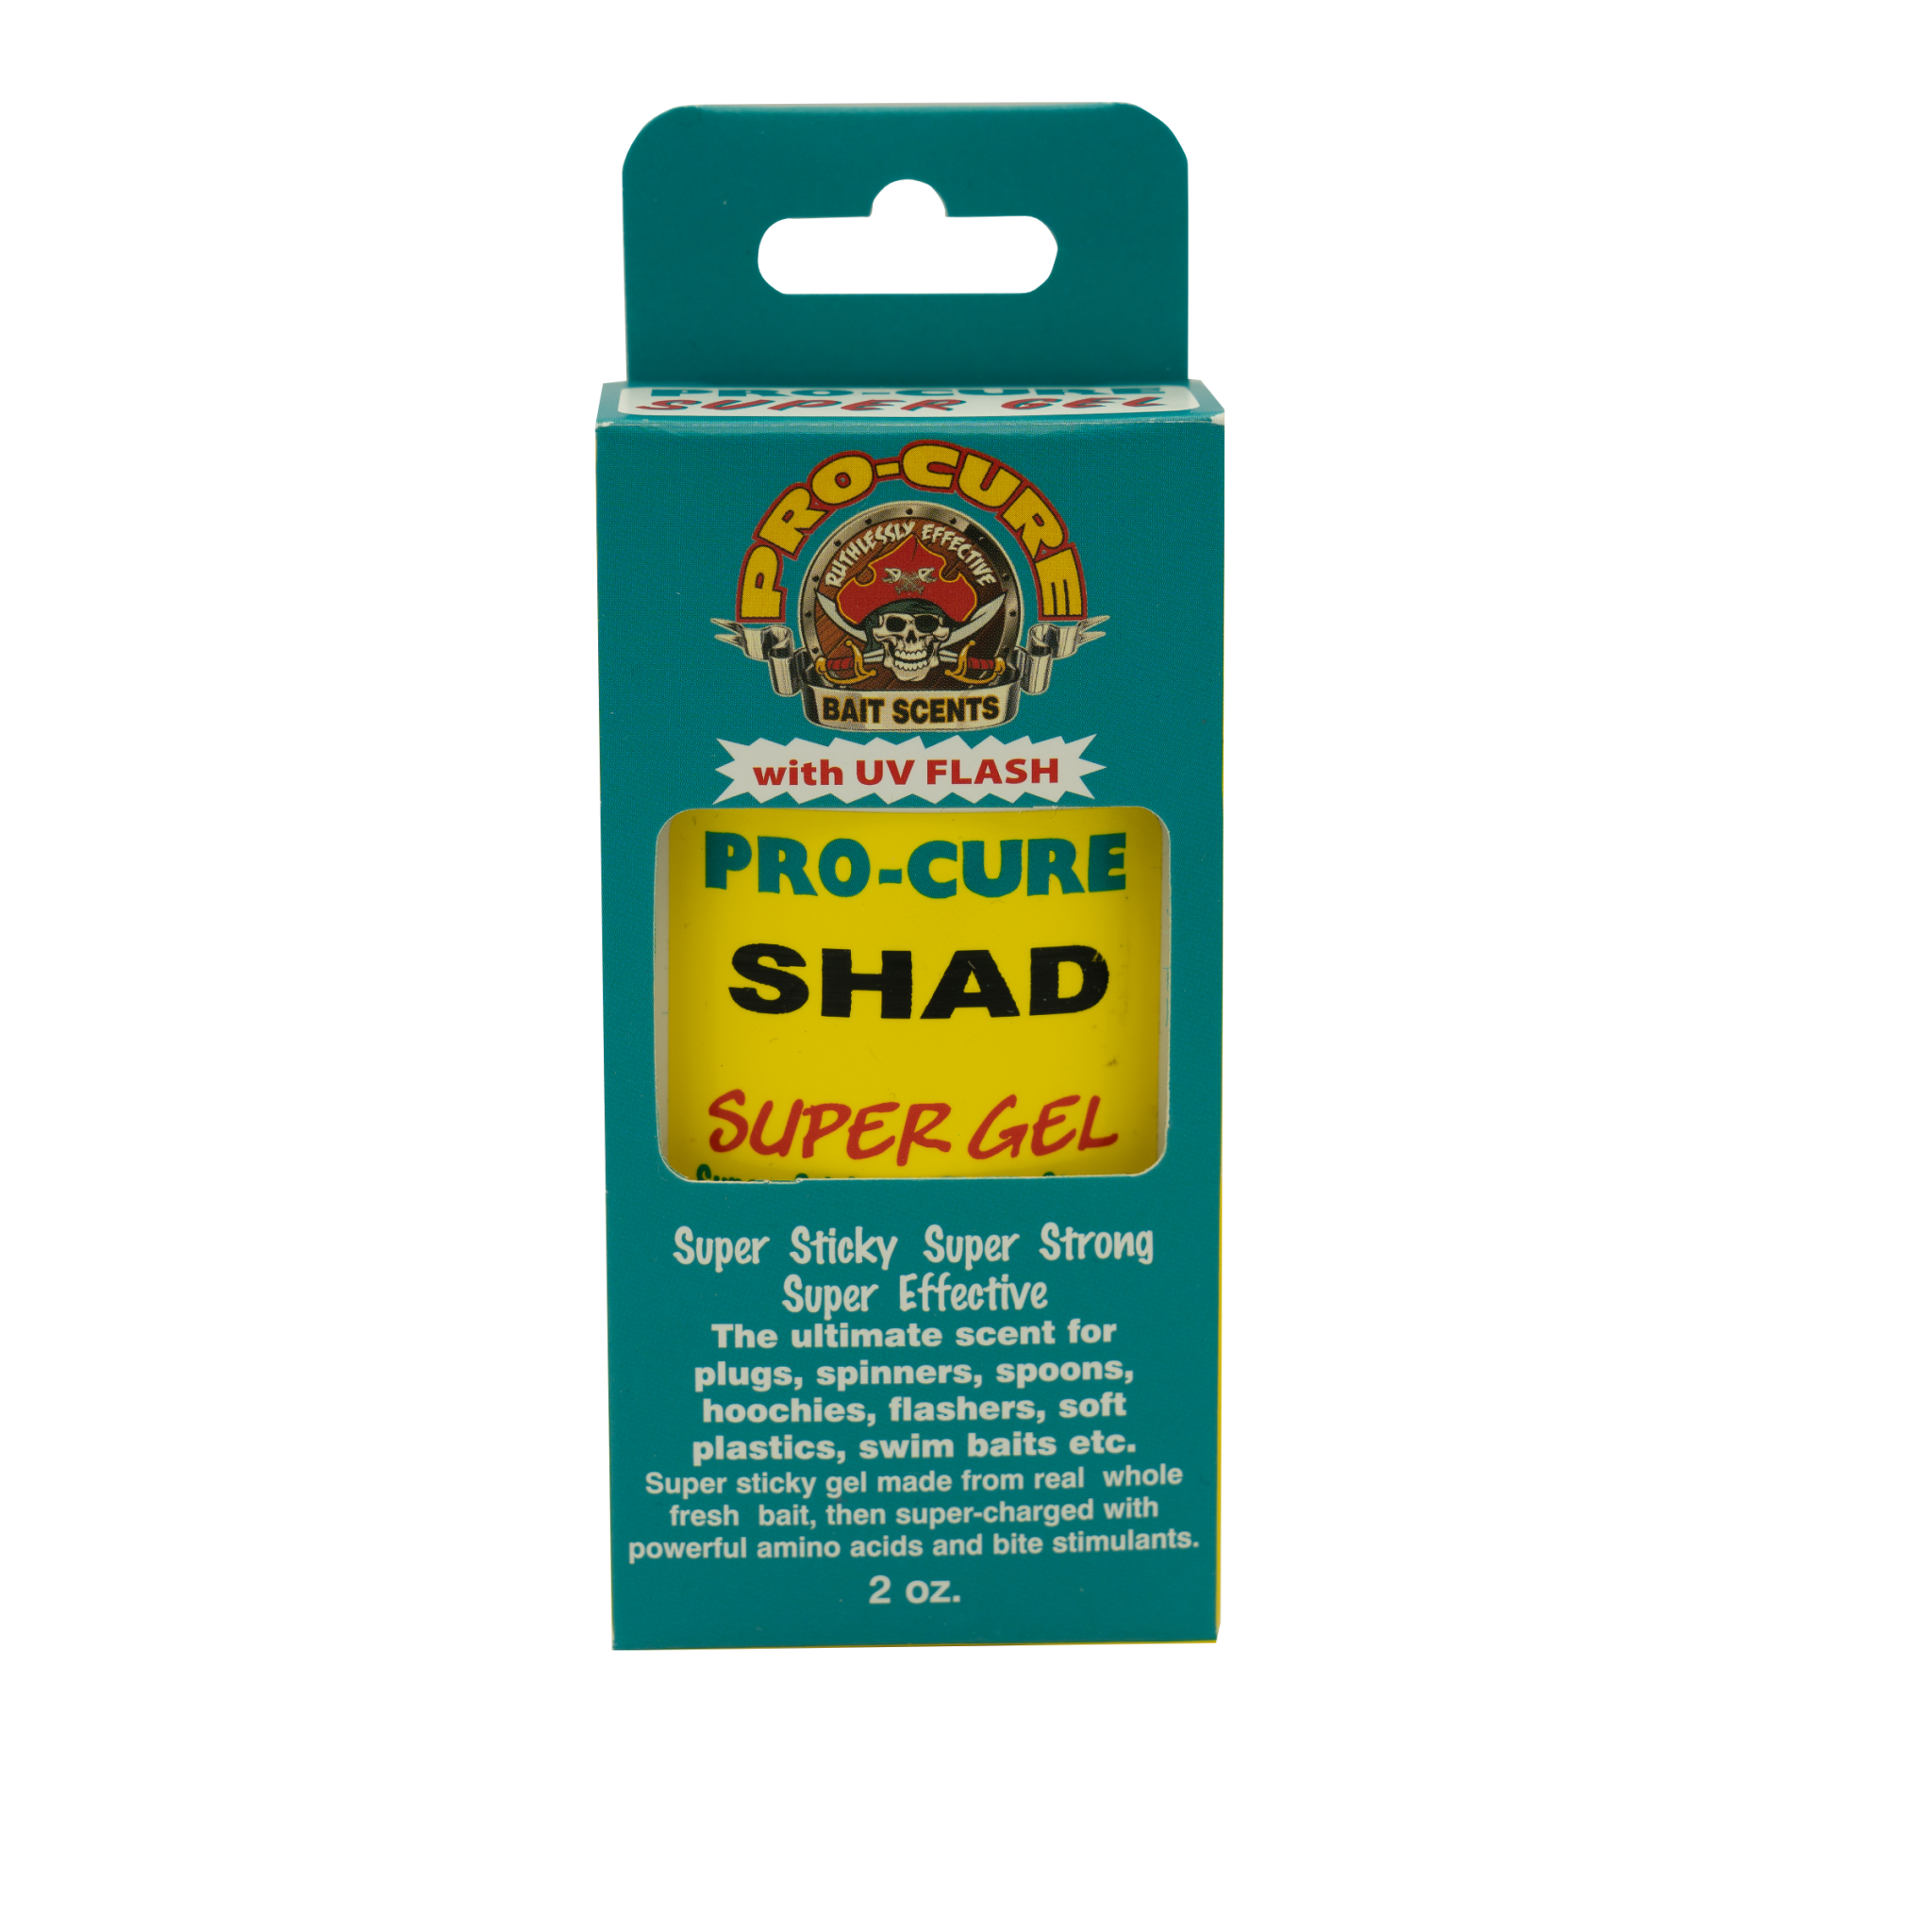 SHAD SUPER GEL – Pro-Cure, Inc